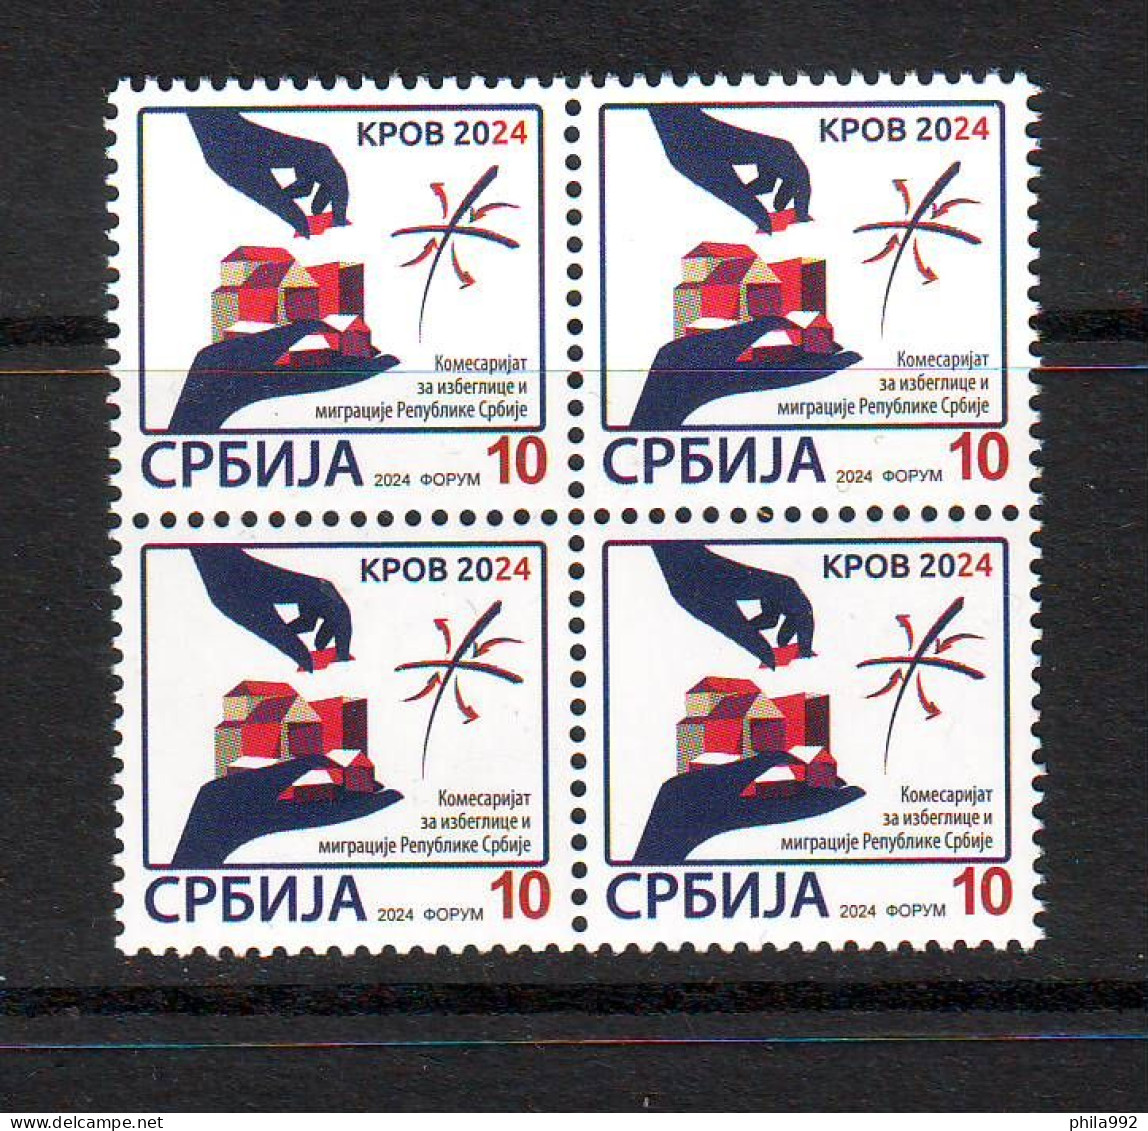 Serbia 2024 Charity Stamp KROV Block Of 4 MNH - Serbia